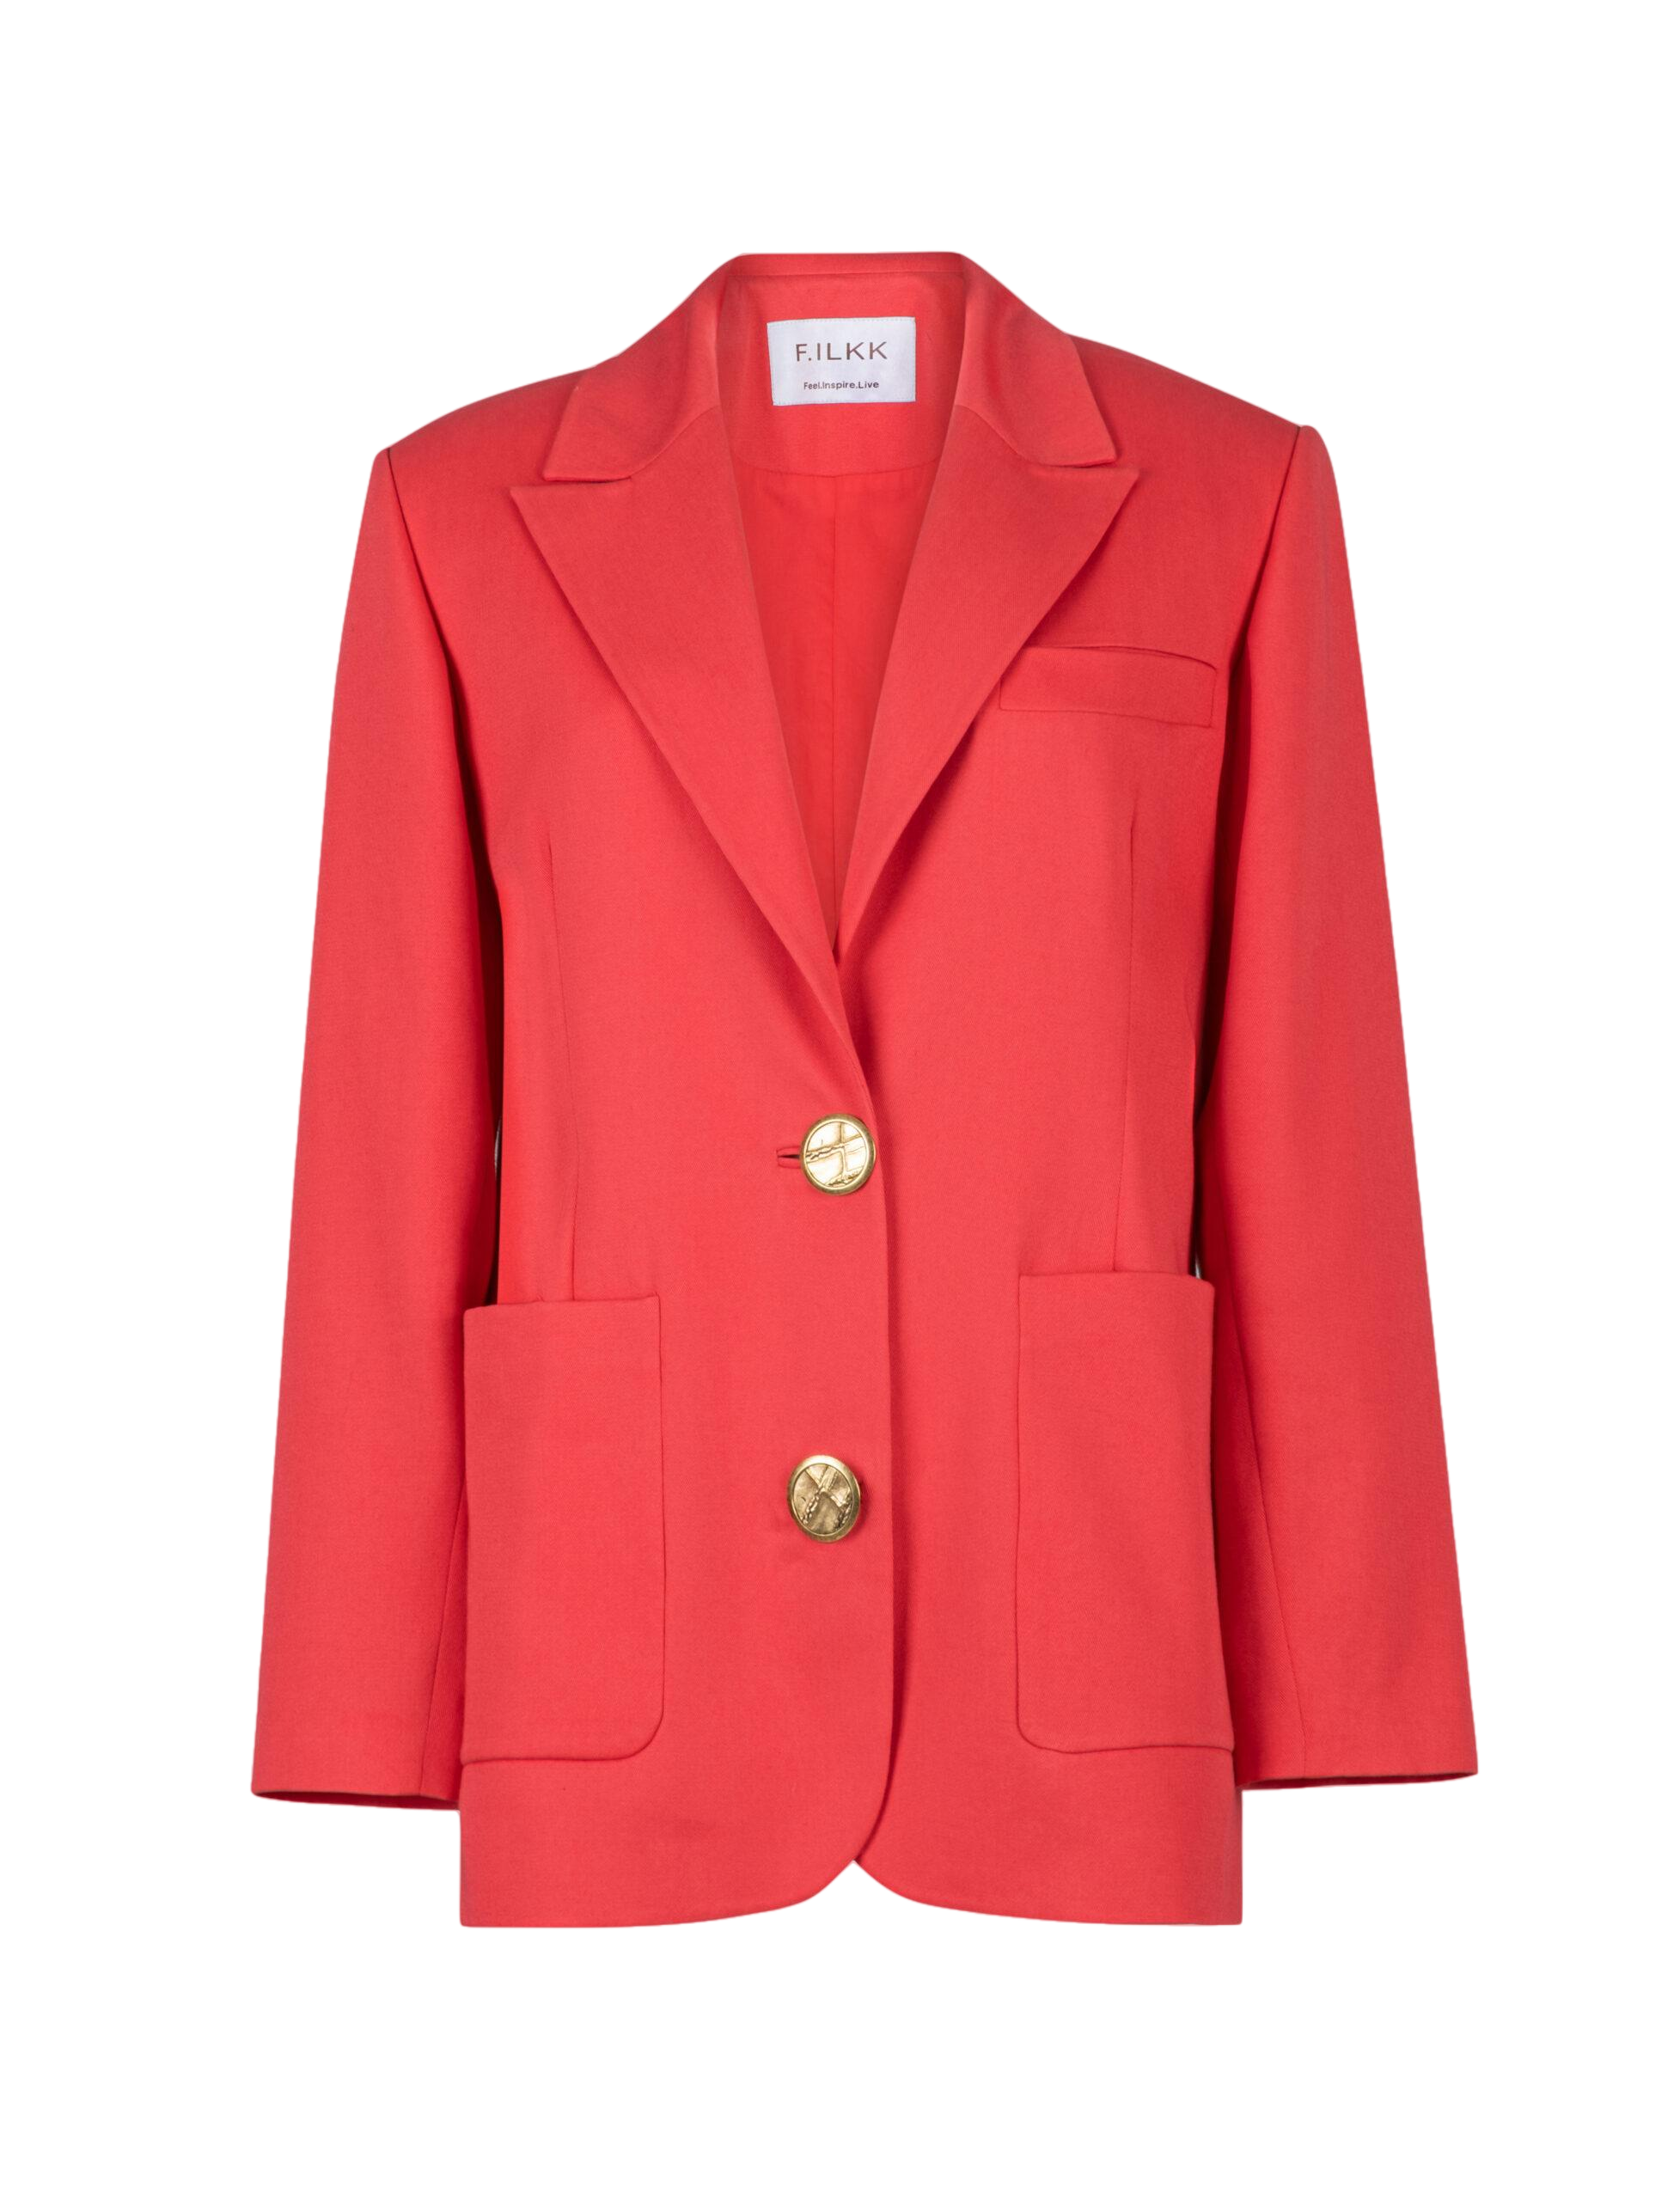 F.ilkk Red Oversize Jacket